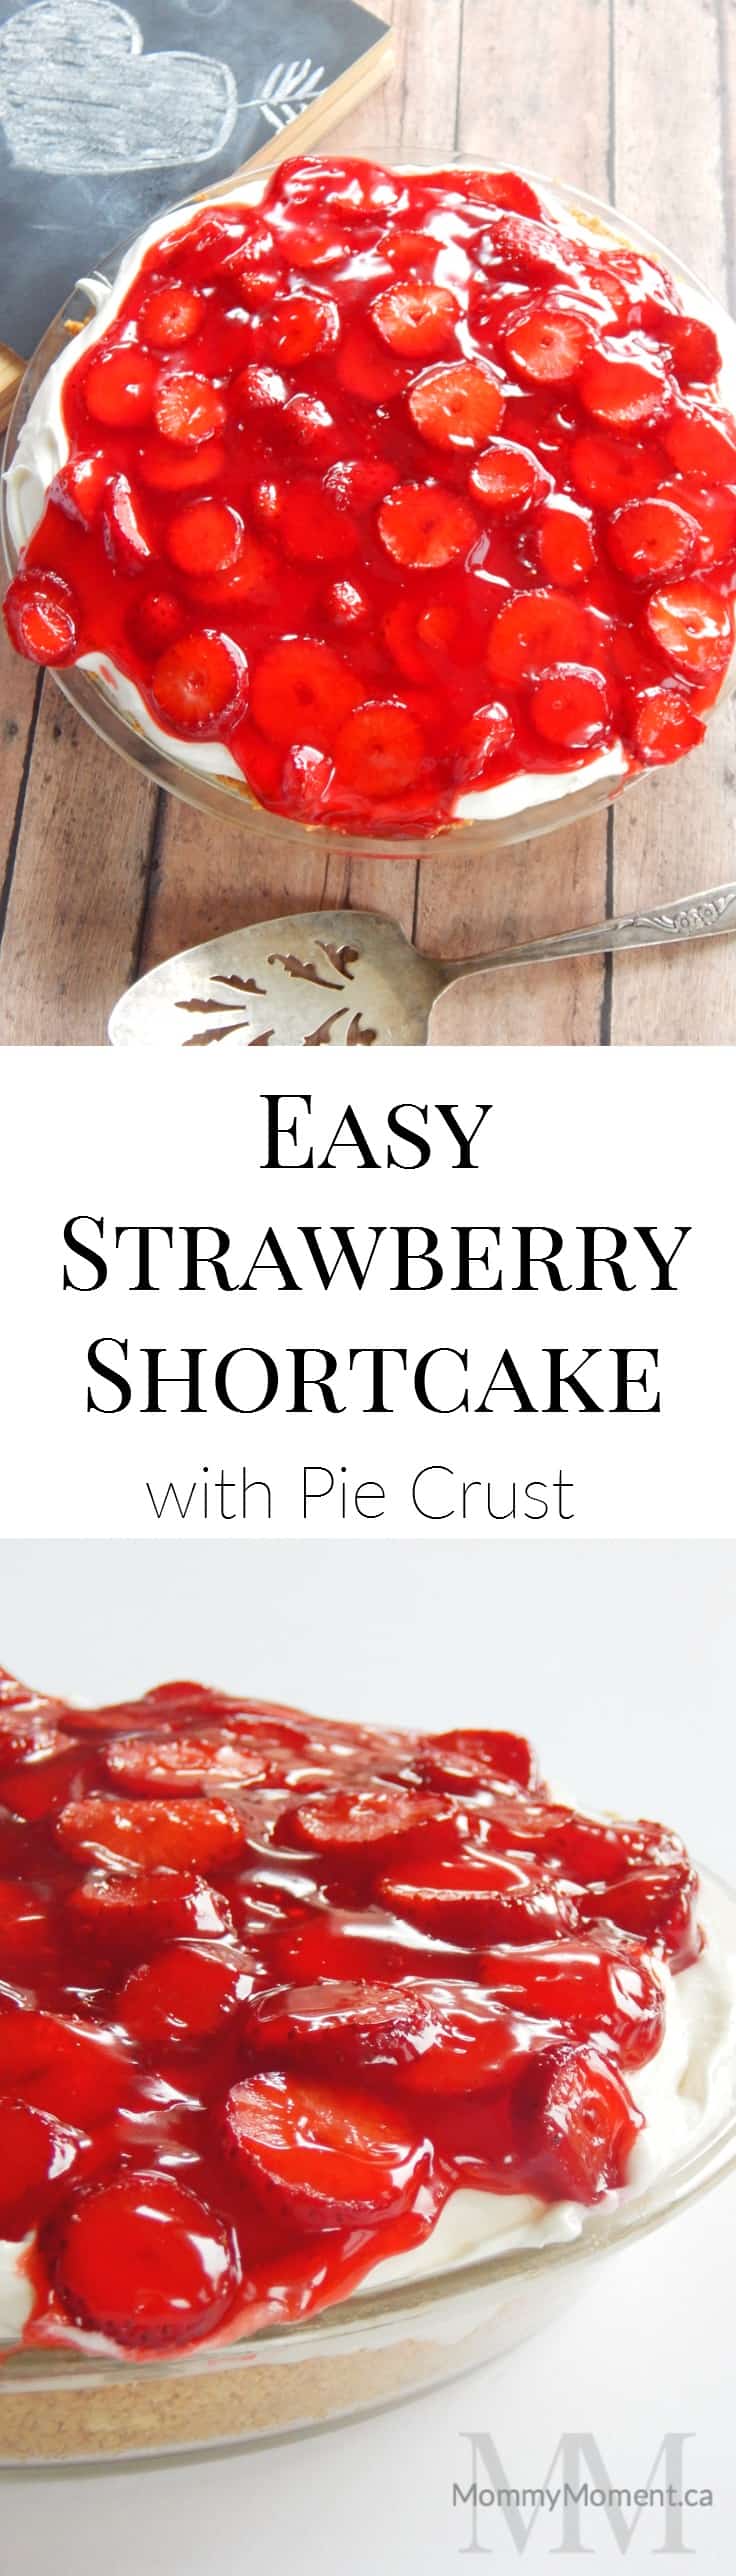 Easy Strawberry Shortcake with pie crust